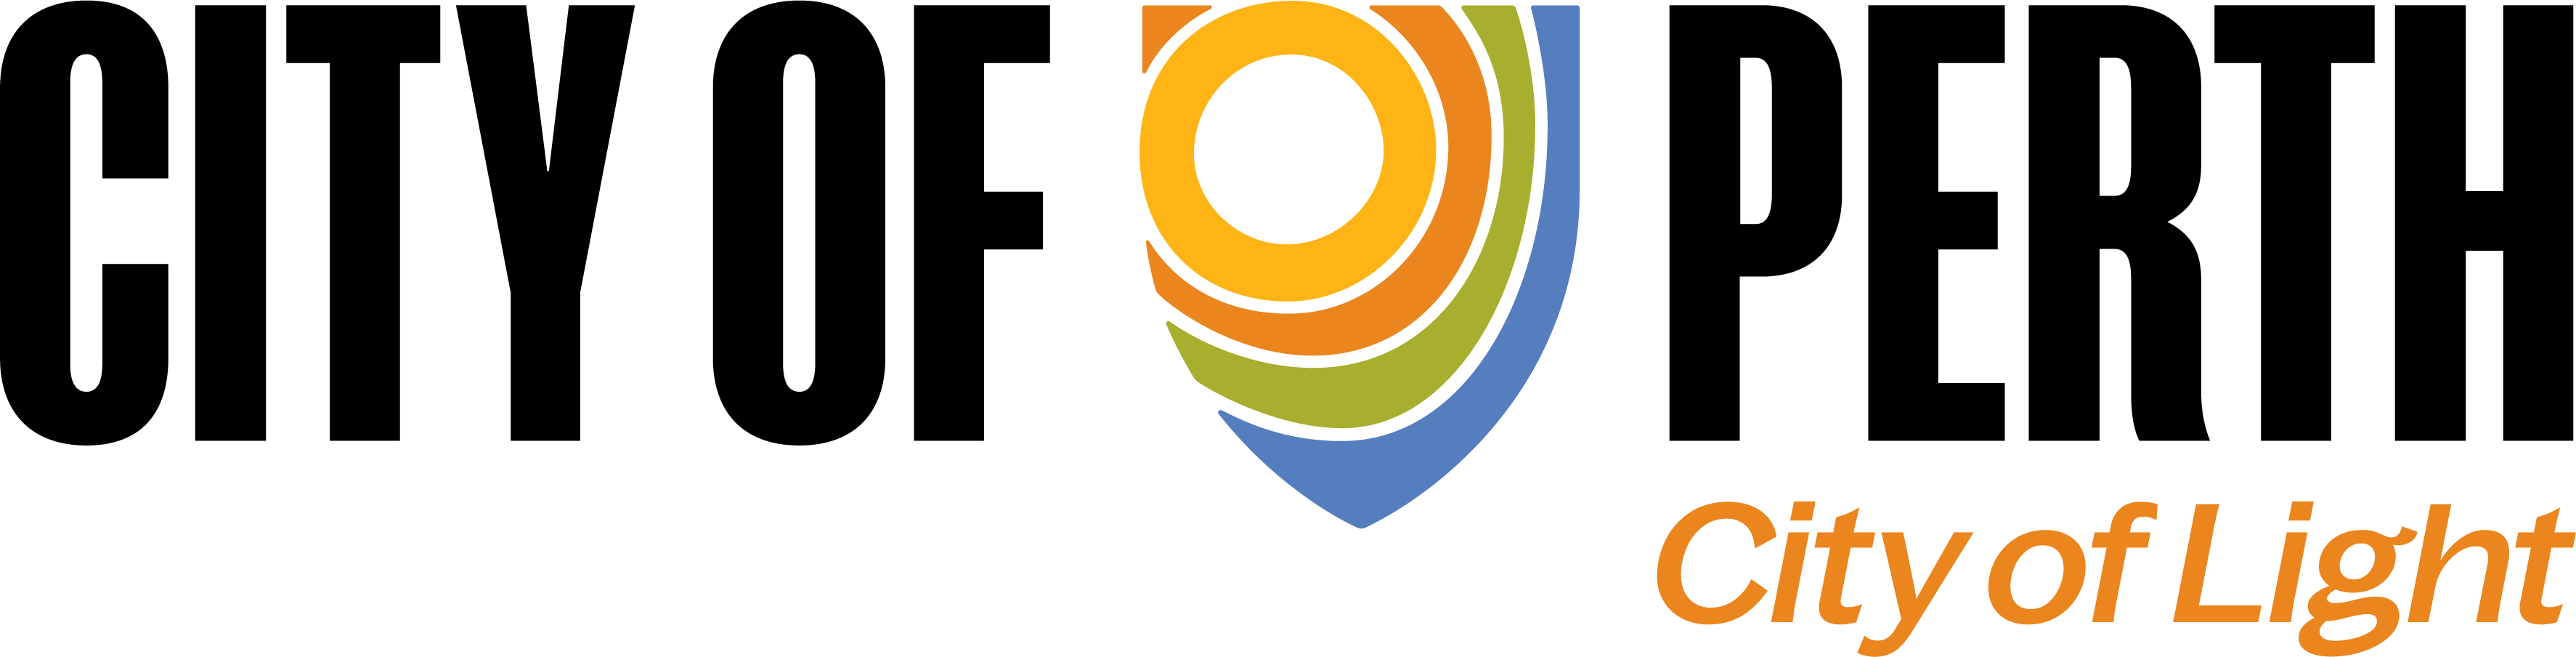 City of Perth - City of Light logo